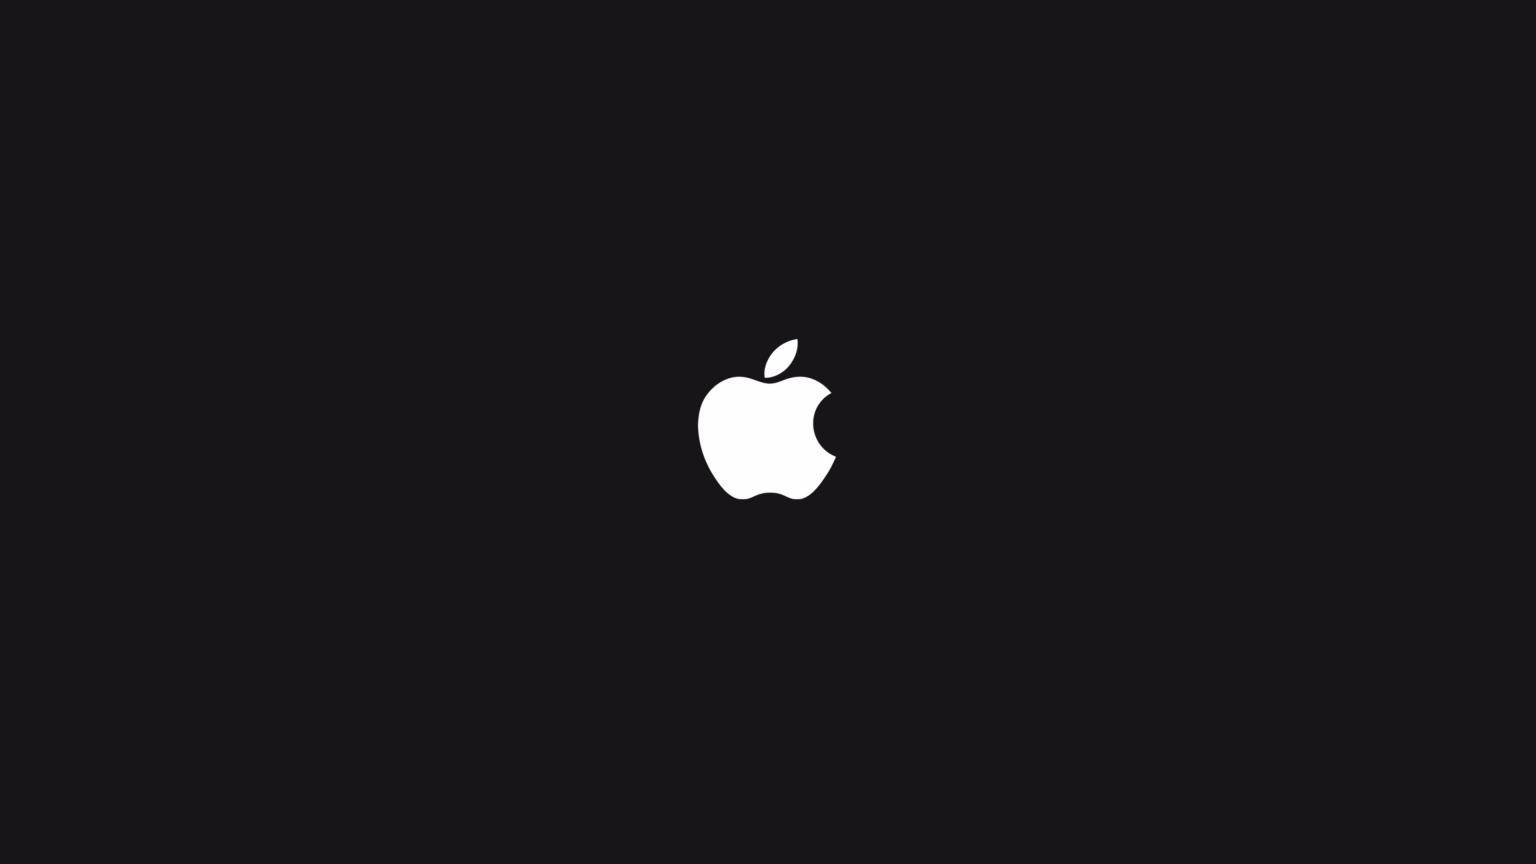 Apple Logo 4k On Dark Bagground